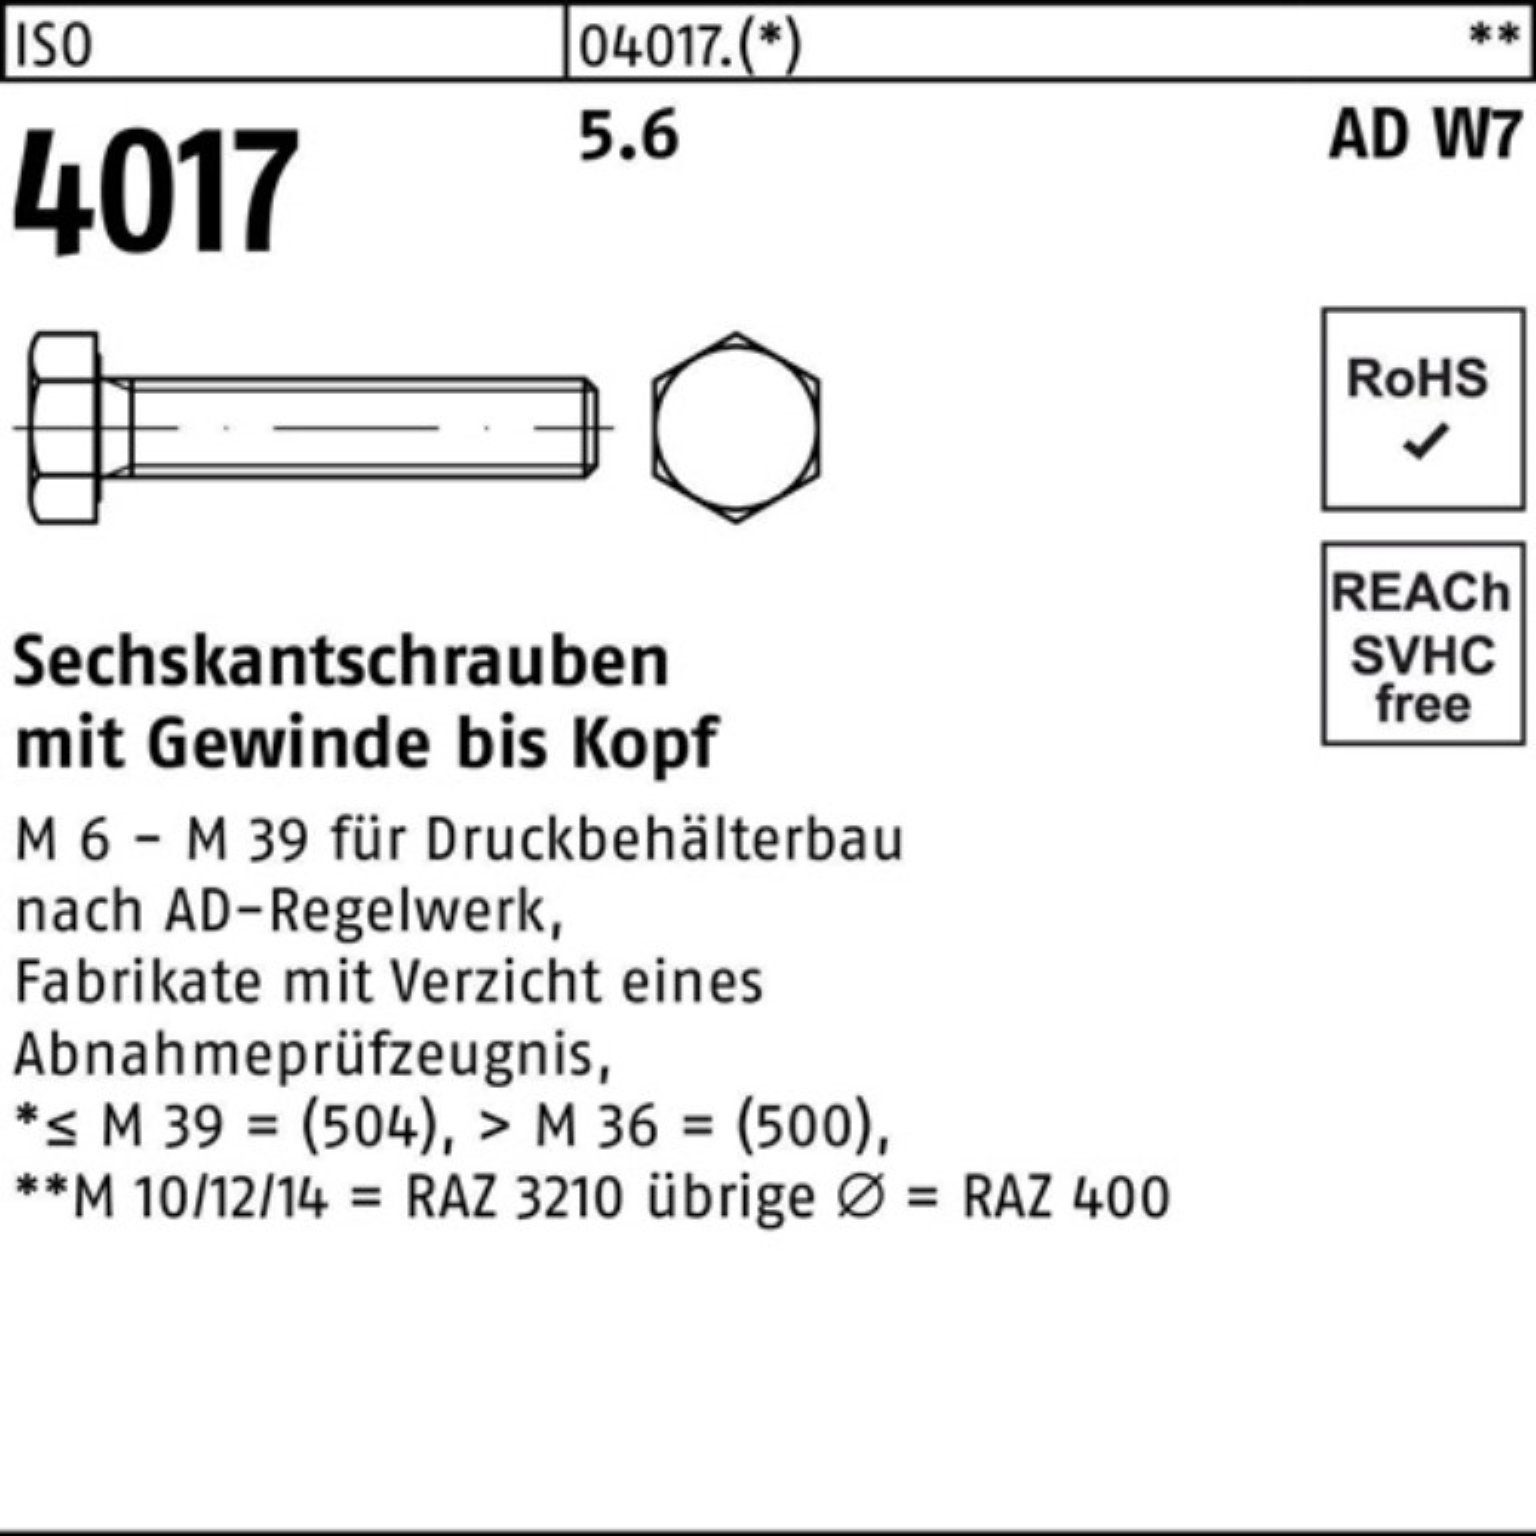 4017 Pack VG Sechskantschraube 100er 5.6 M20x ISO 110 25 W7 Bufab Stück Sechskantschraube AD